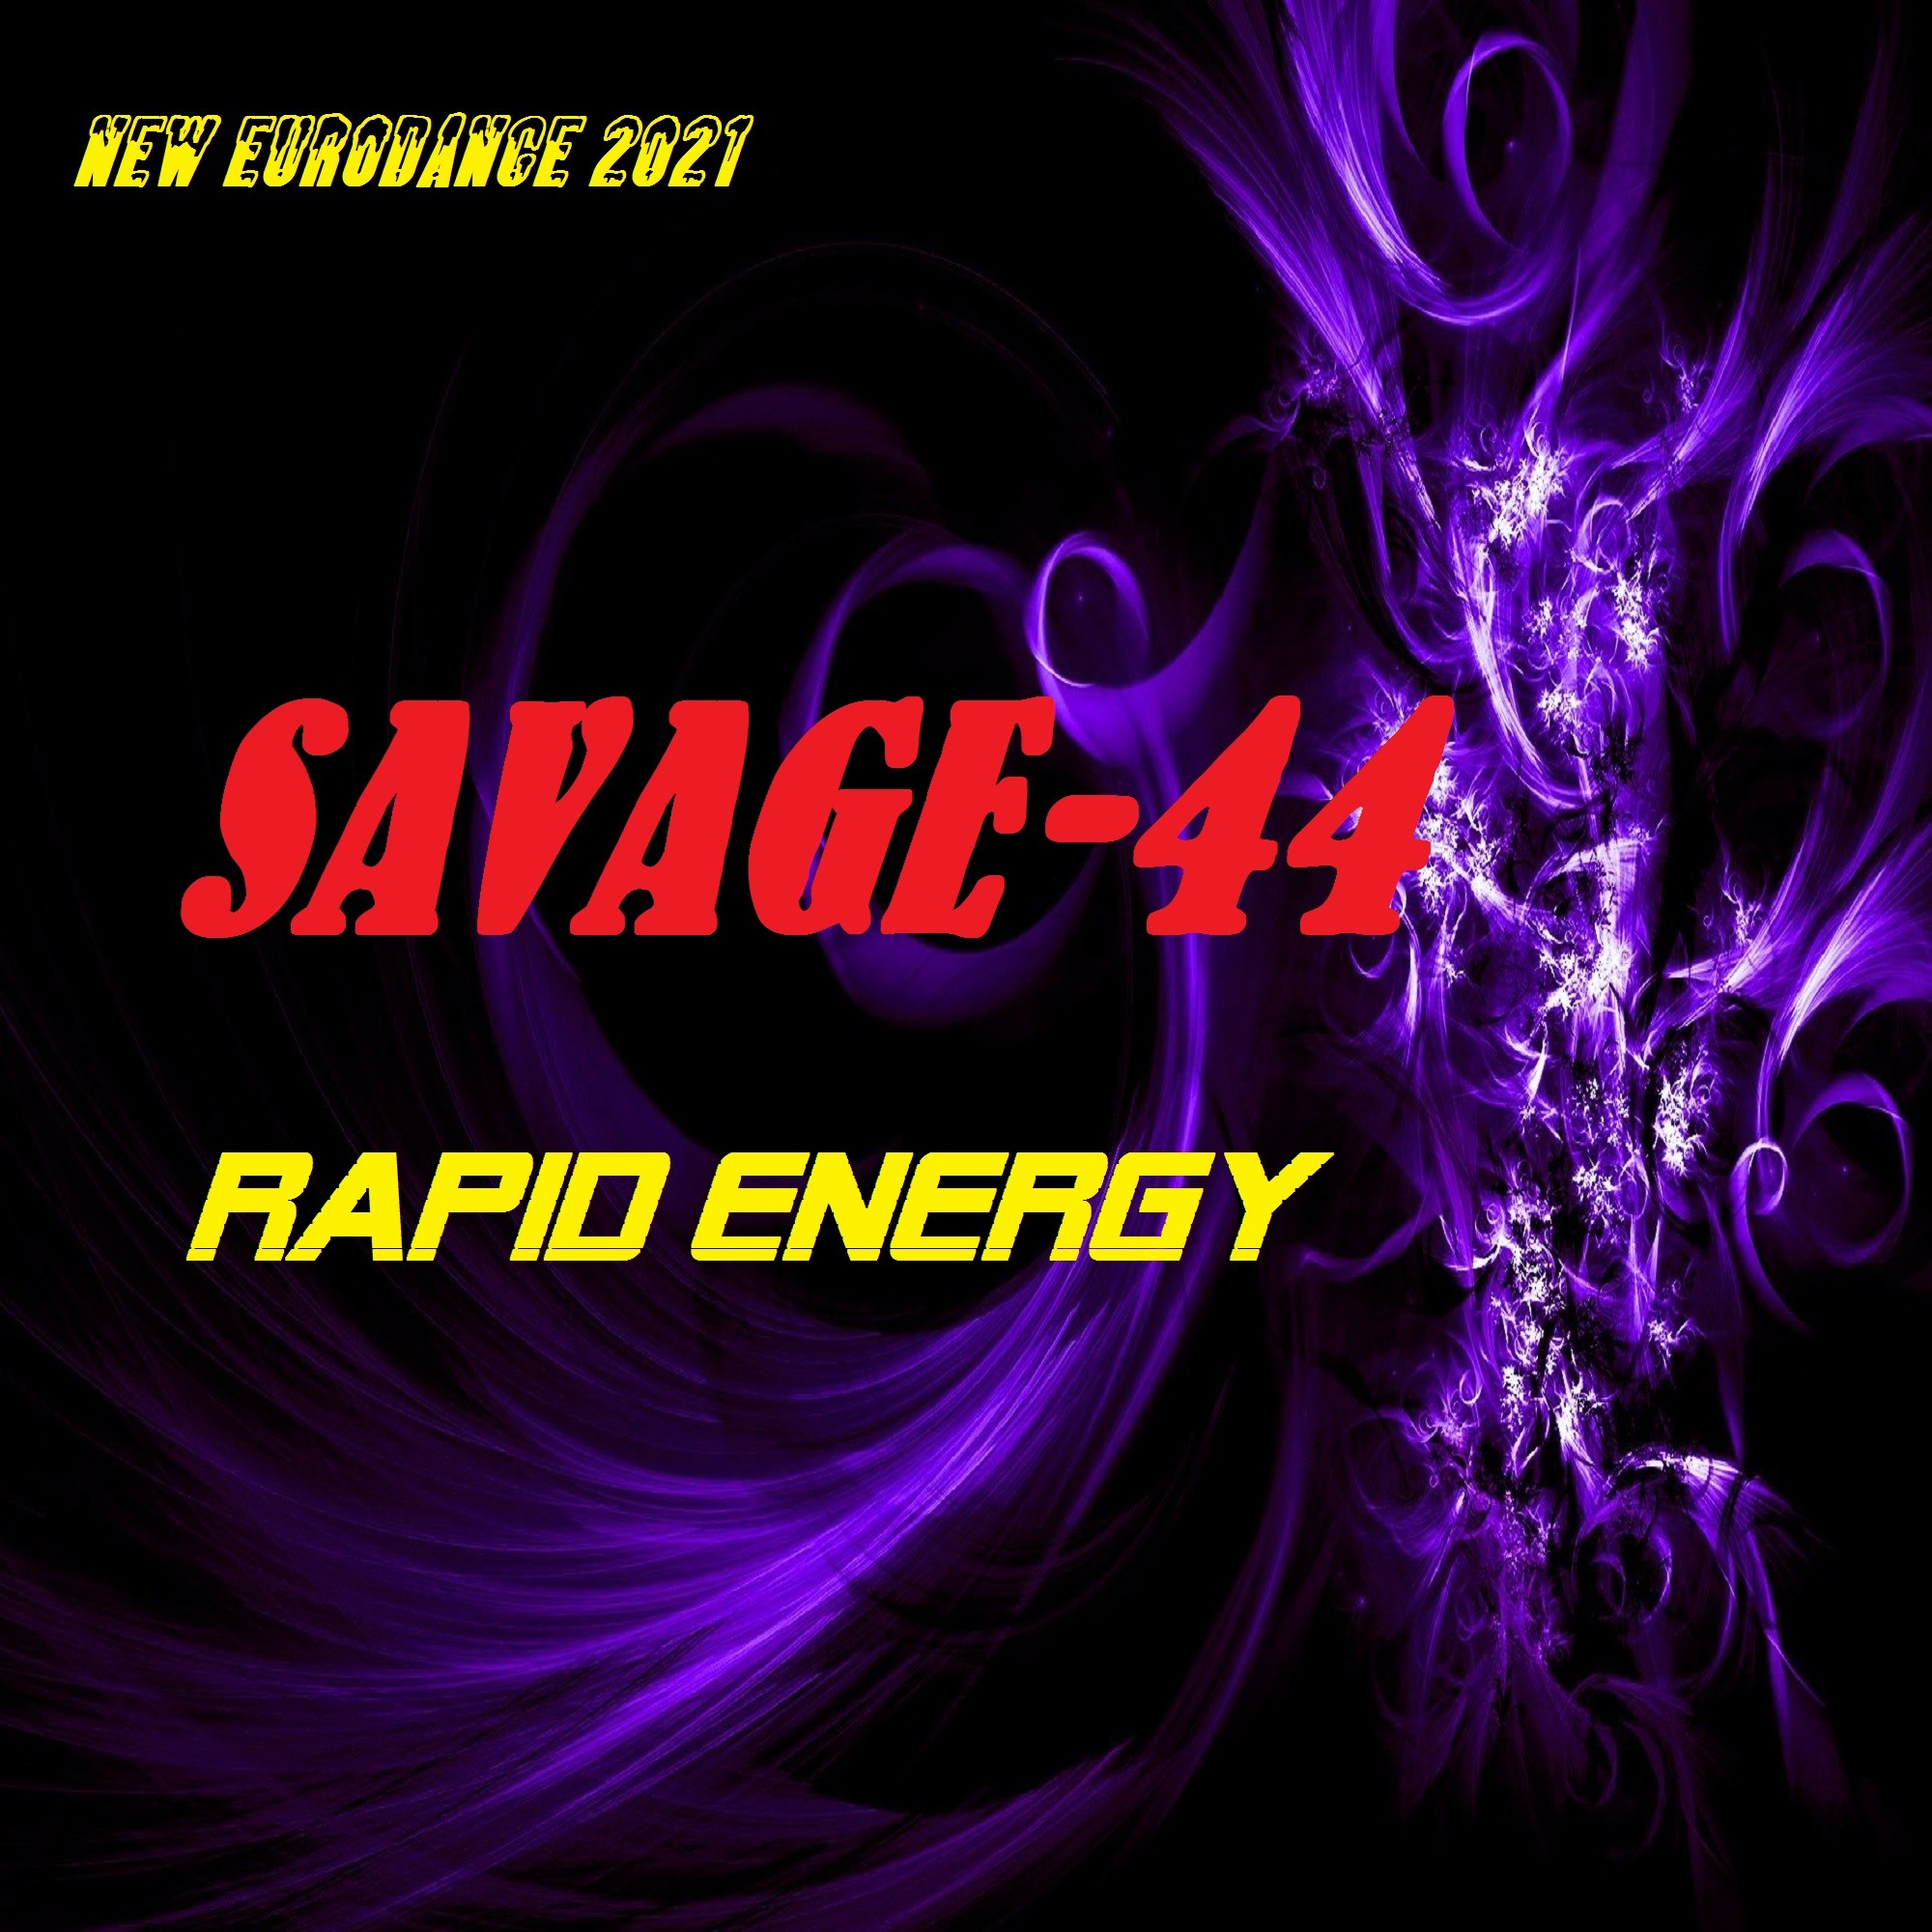 Savage 44 the music ring. Savage-44 - Rapid Energy (Eurodance Version). Savage -44 - Rapid Energy New Eurodance Music 2021. Savage 44. Саваж 44 Евроданс.